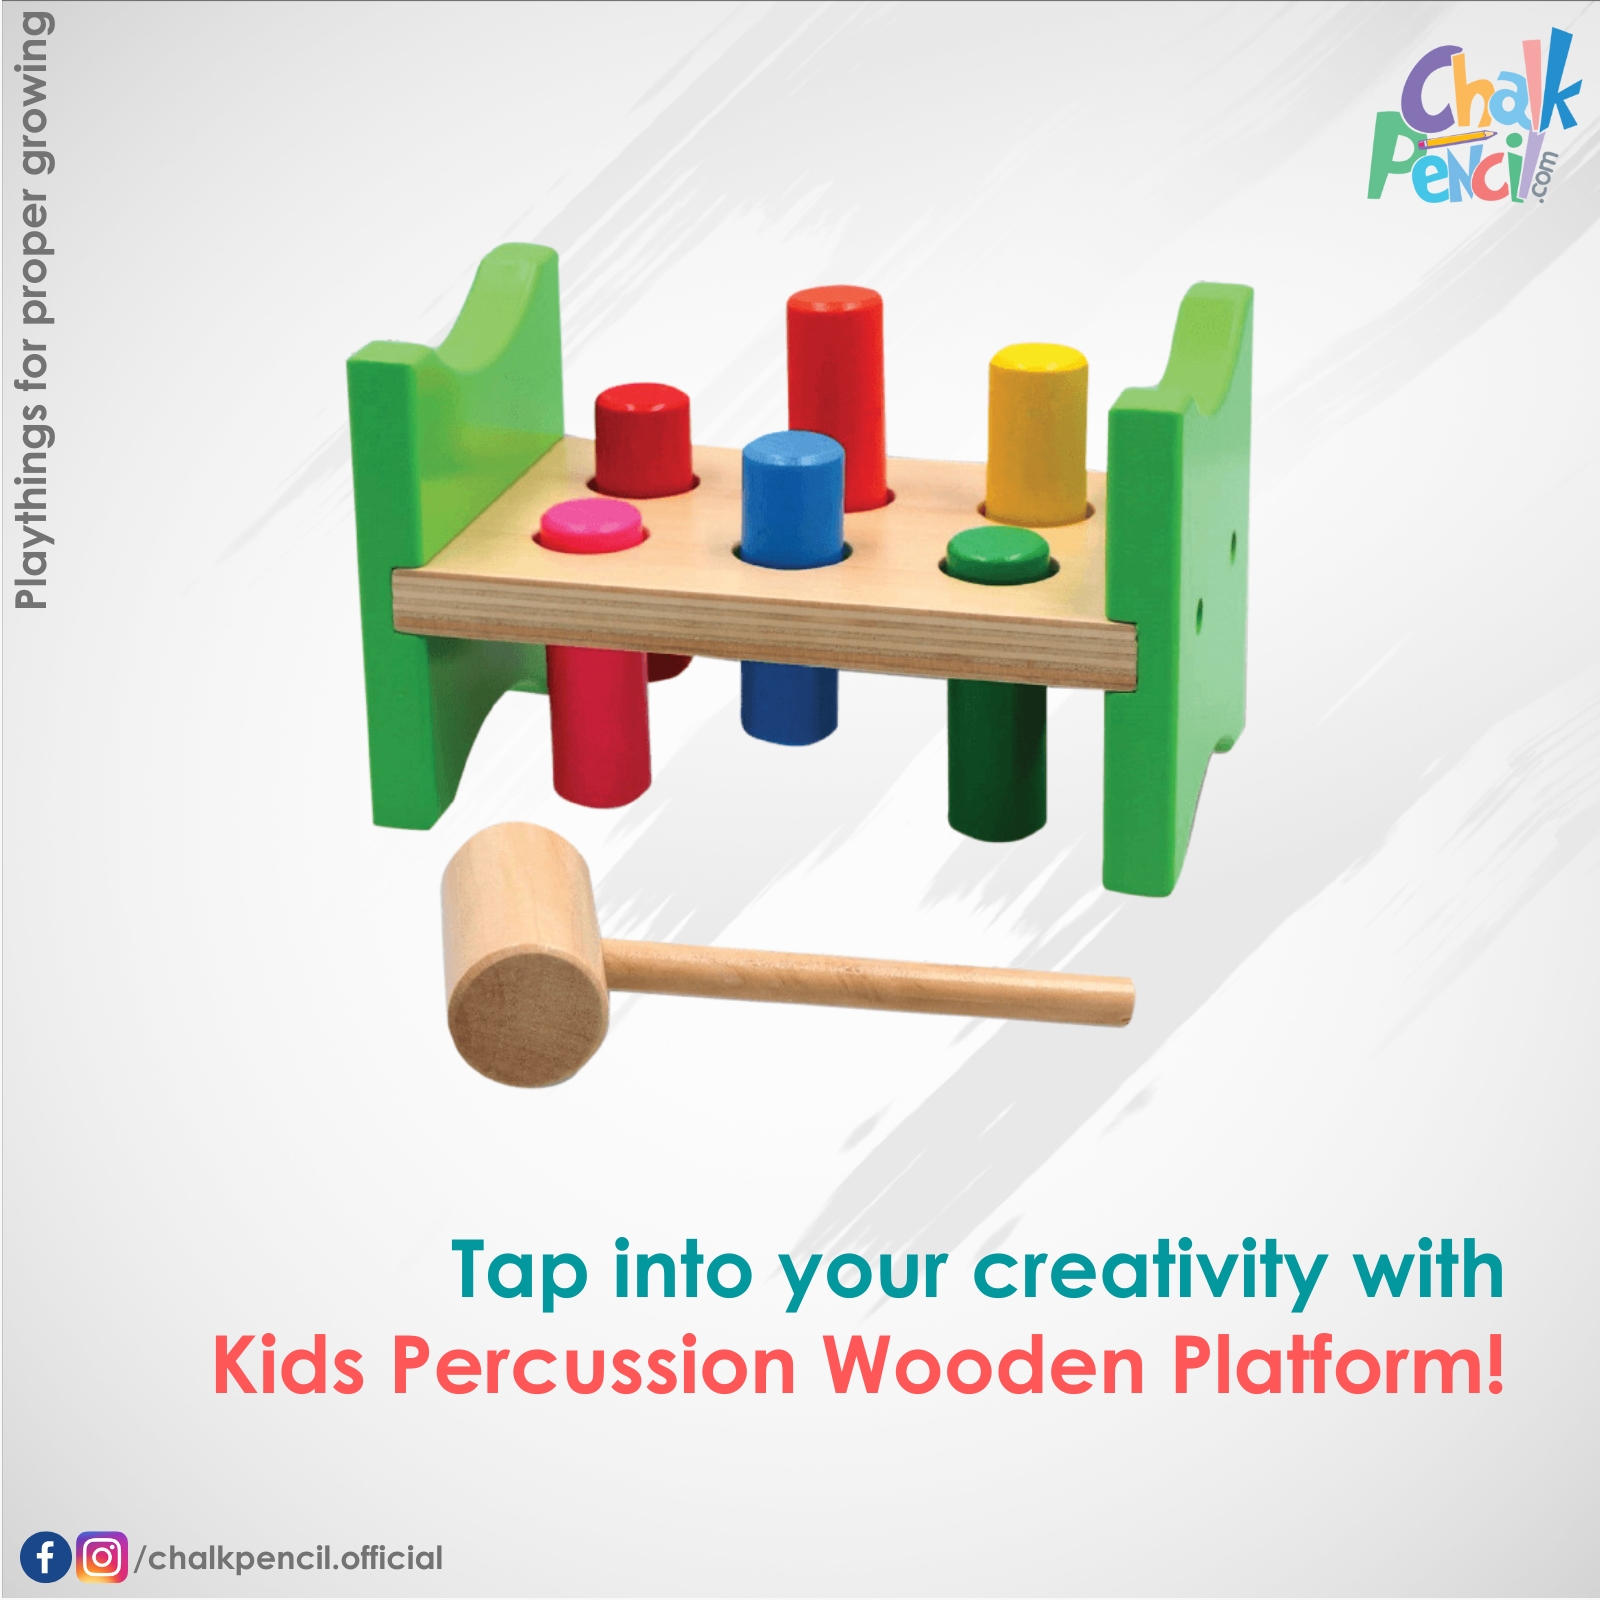 Kids Percussion Wooden Platform